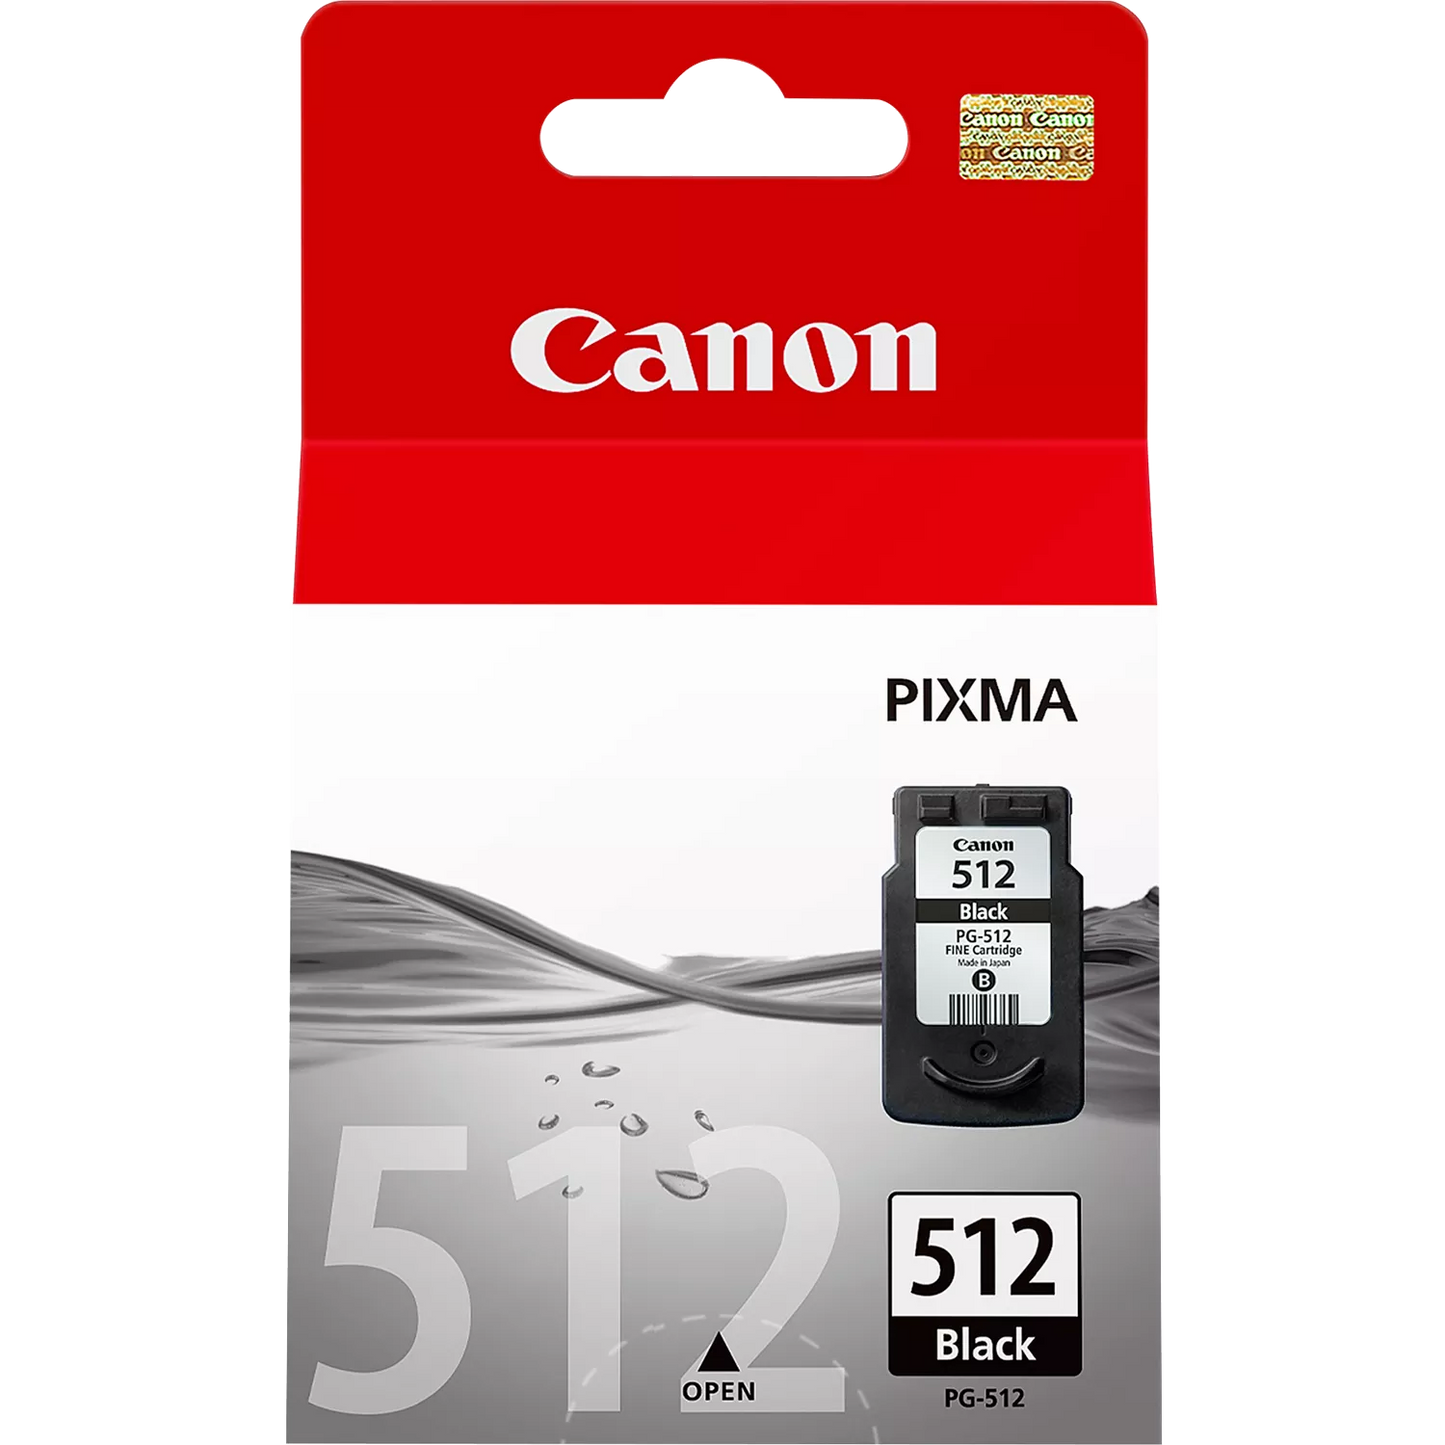 Canon PG-512 High Yield Black Ink Cartridge